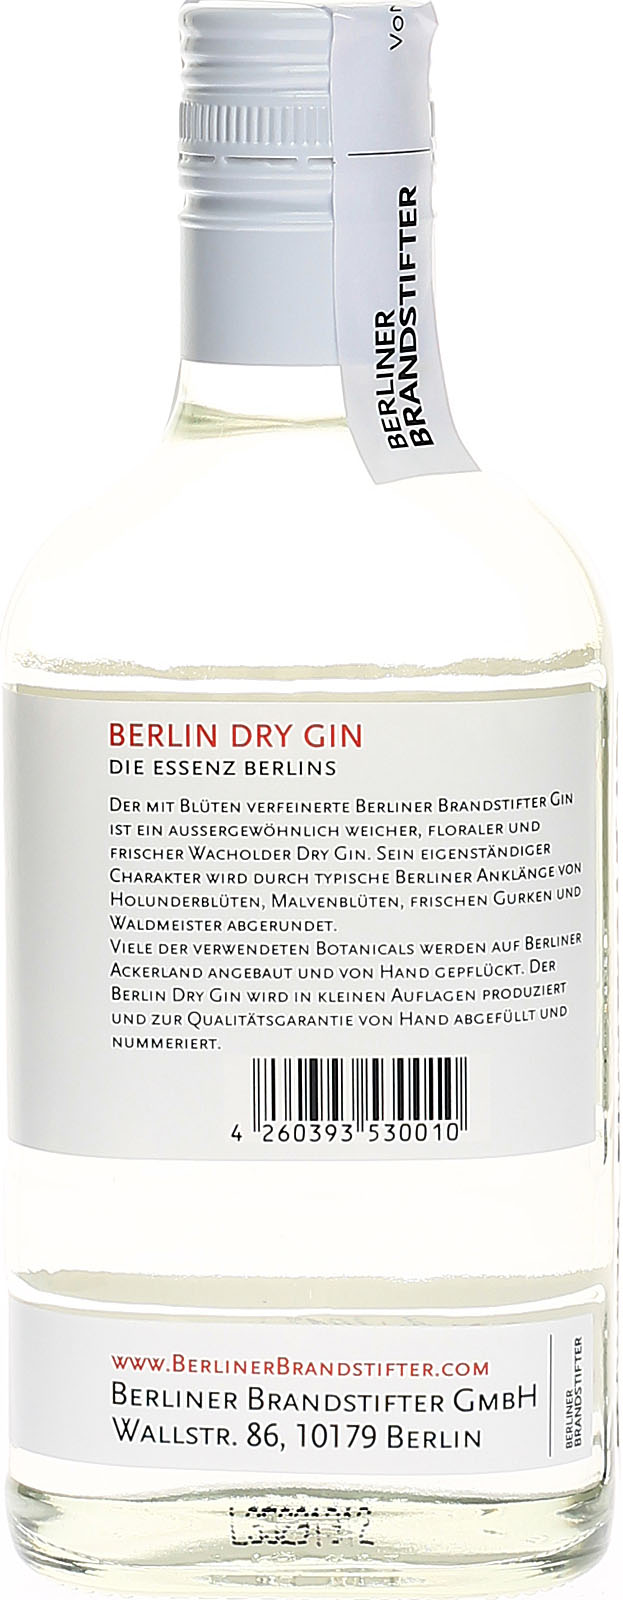 Berliner Brandstifter Dry ml. 350 und 43,3 Berlin % Gin